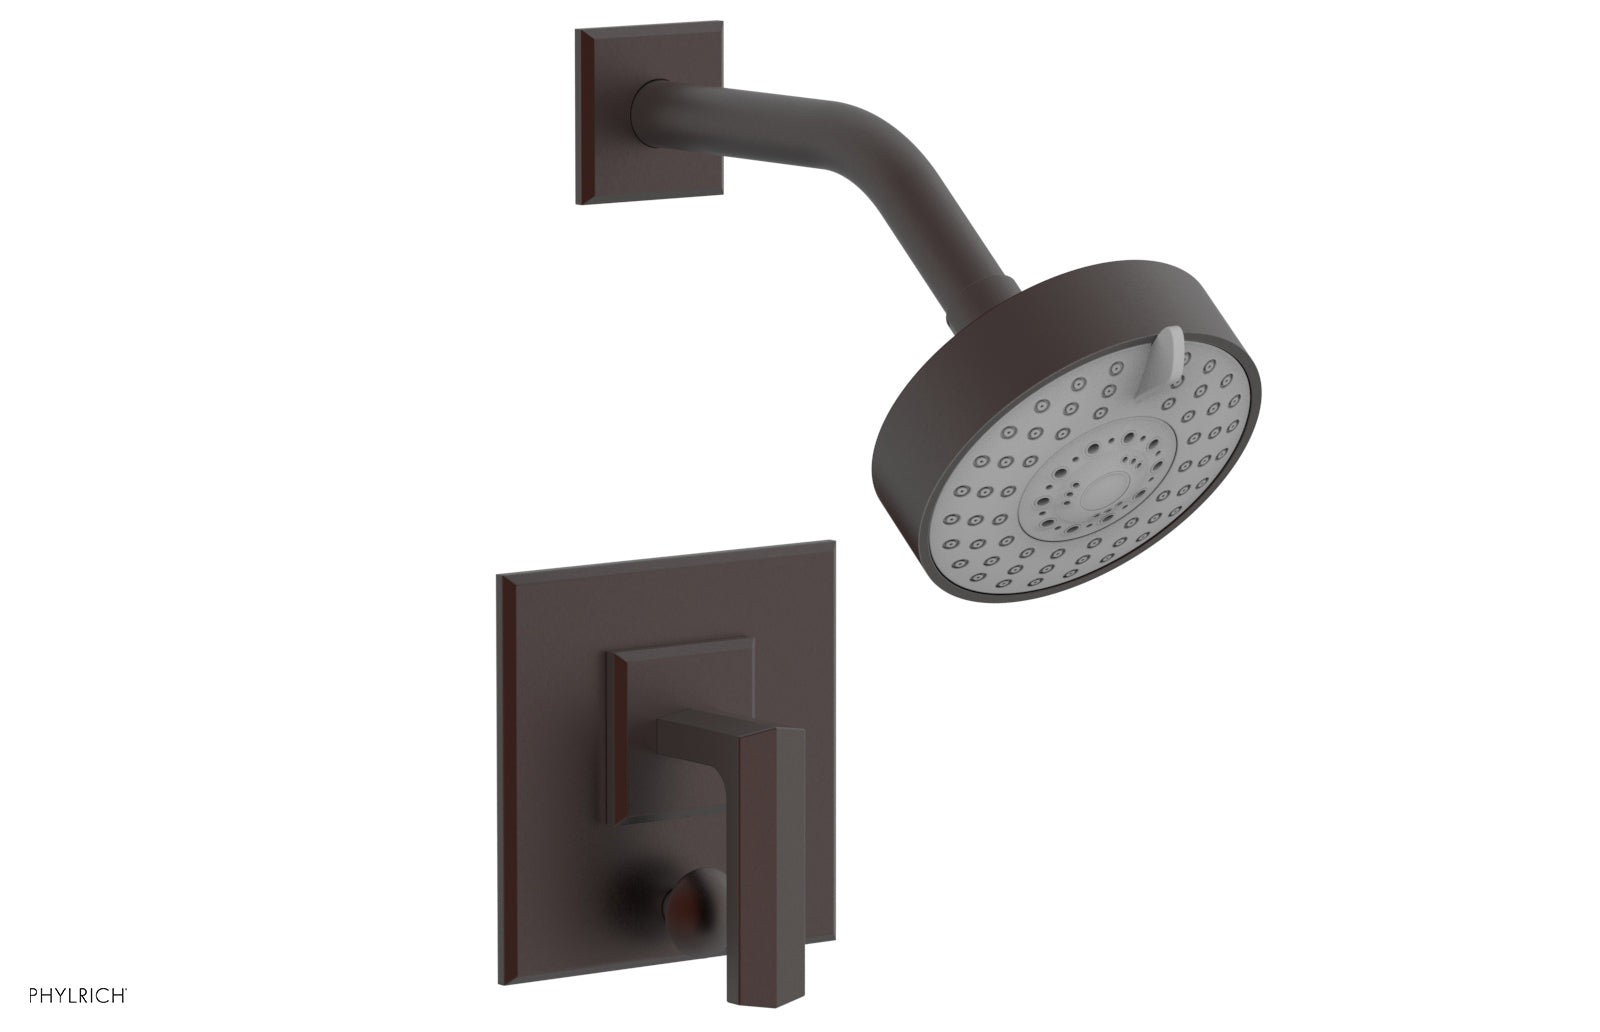 Phylrich DIAMA Pressure Balance Shower and Diverter Set (Less Spout), Lever Handle